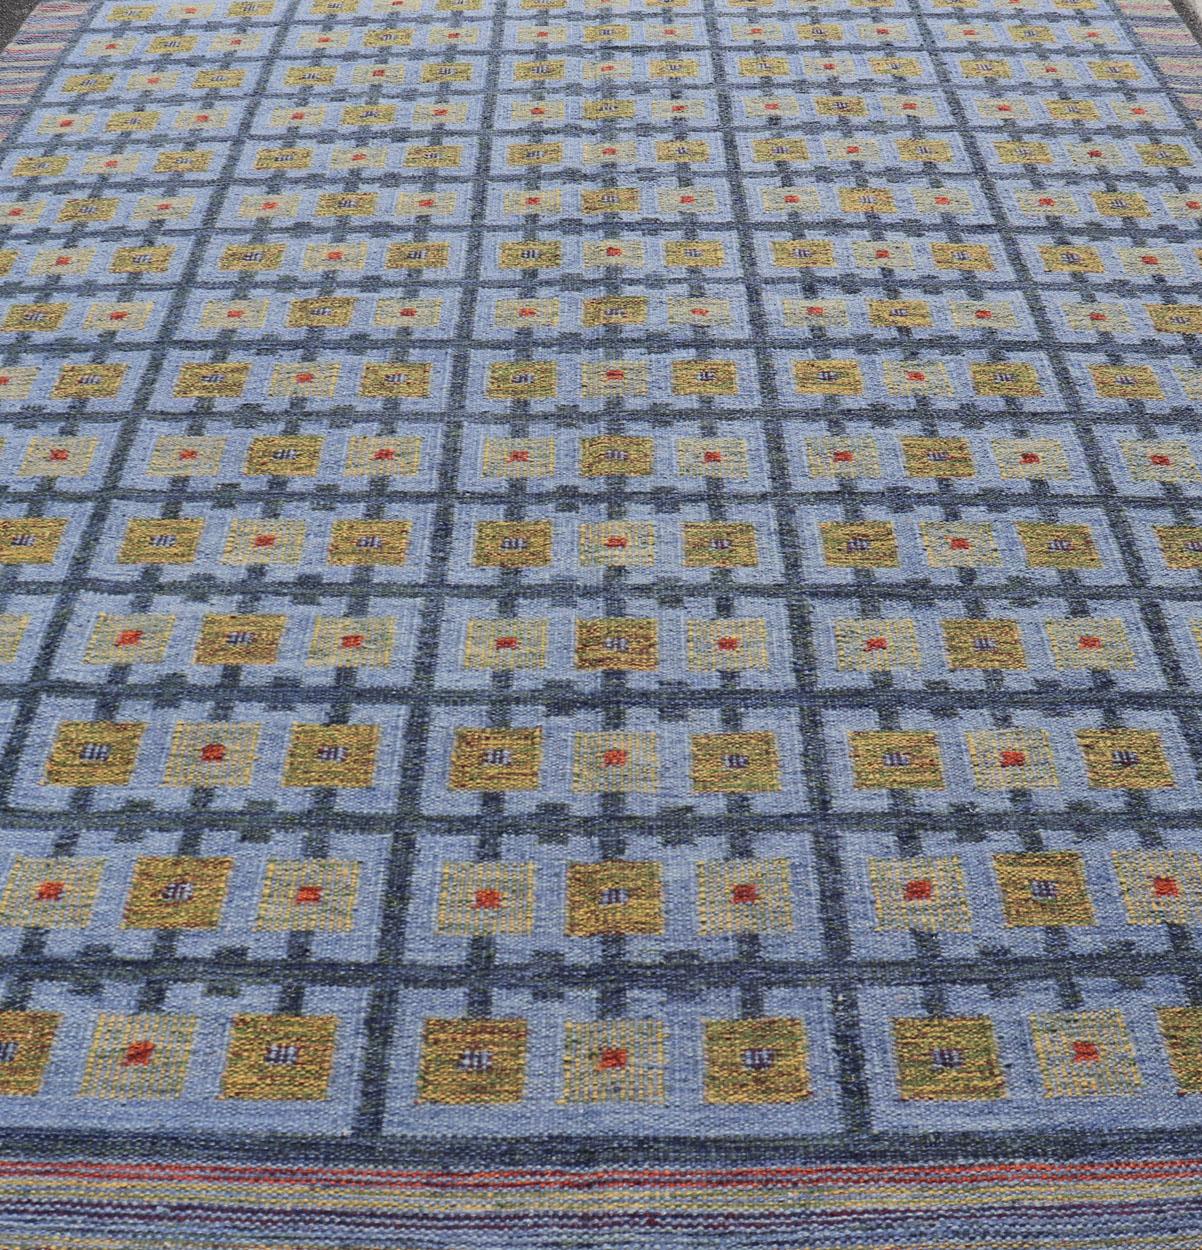 Keivan Woven Arts Large Modern Scandinavian/Swedish Geometric Design Rug. Keivan Woven Arts / rug RJK-24231-SHB-009-13, country of origin / type: India / Scandinavian flat-weave.
Measures: 10'5 x 13'9
This Scandinavian flat-weave patterned rug is